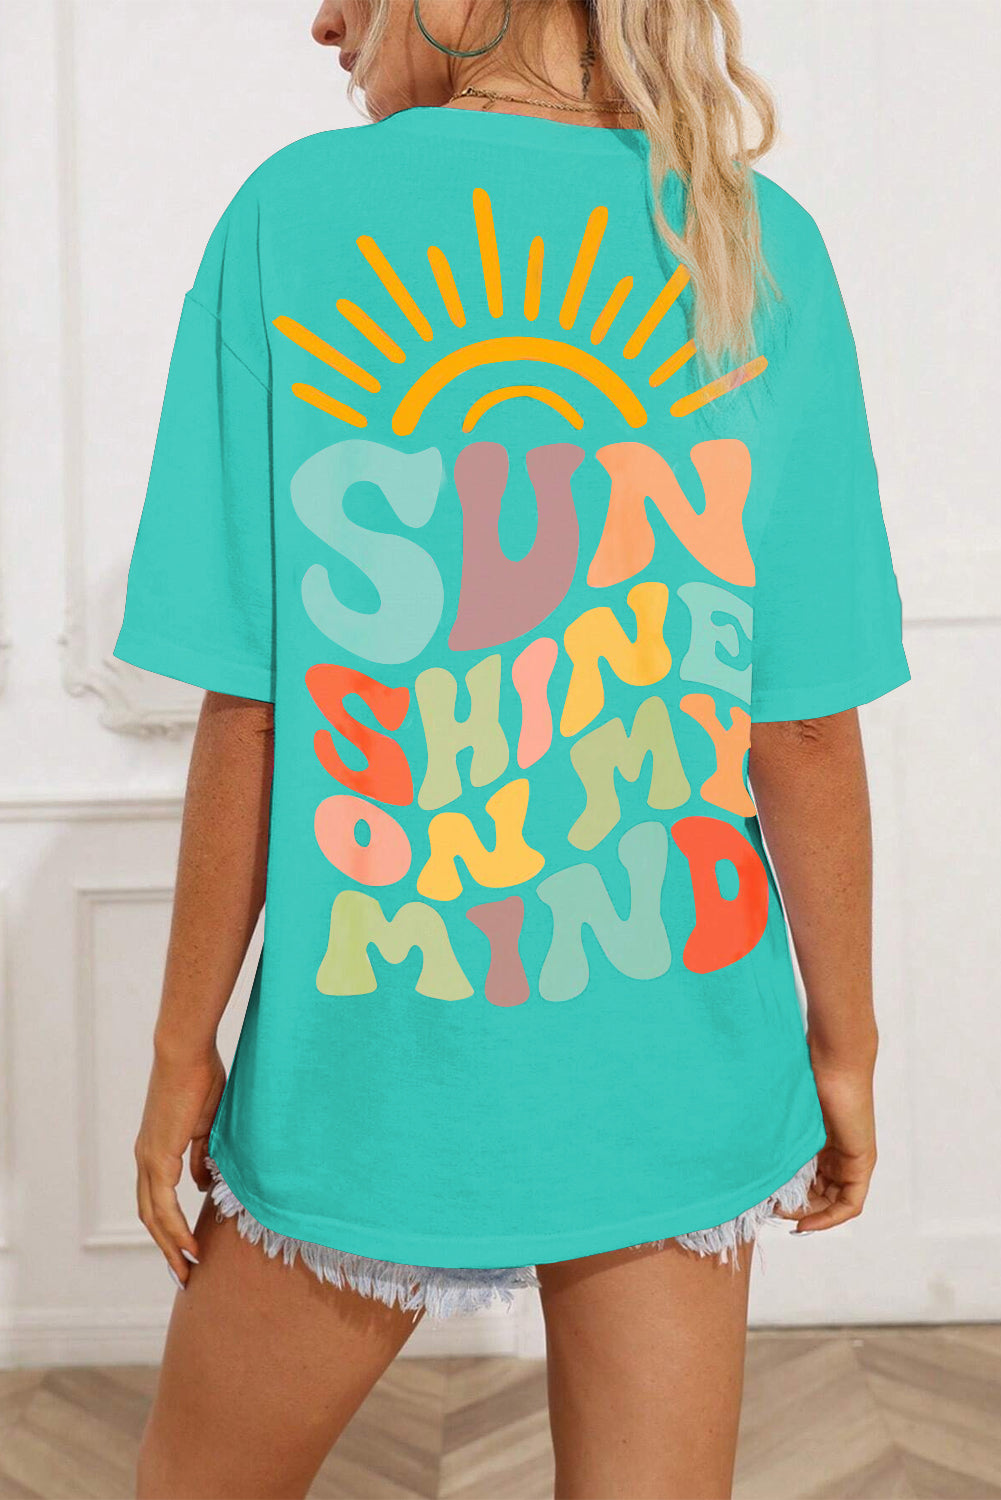 SUN SHINE ON MY MIND Round Neck T-Shirt - SELFTRITSS